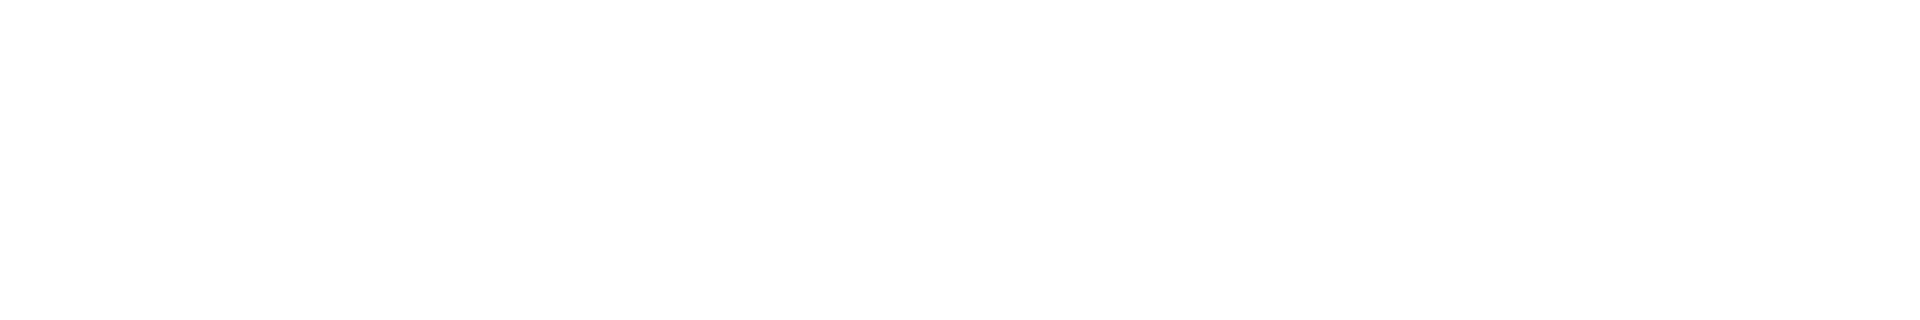 深圳宇行科技-STD banner 2